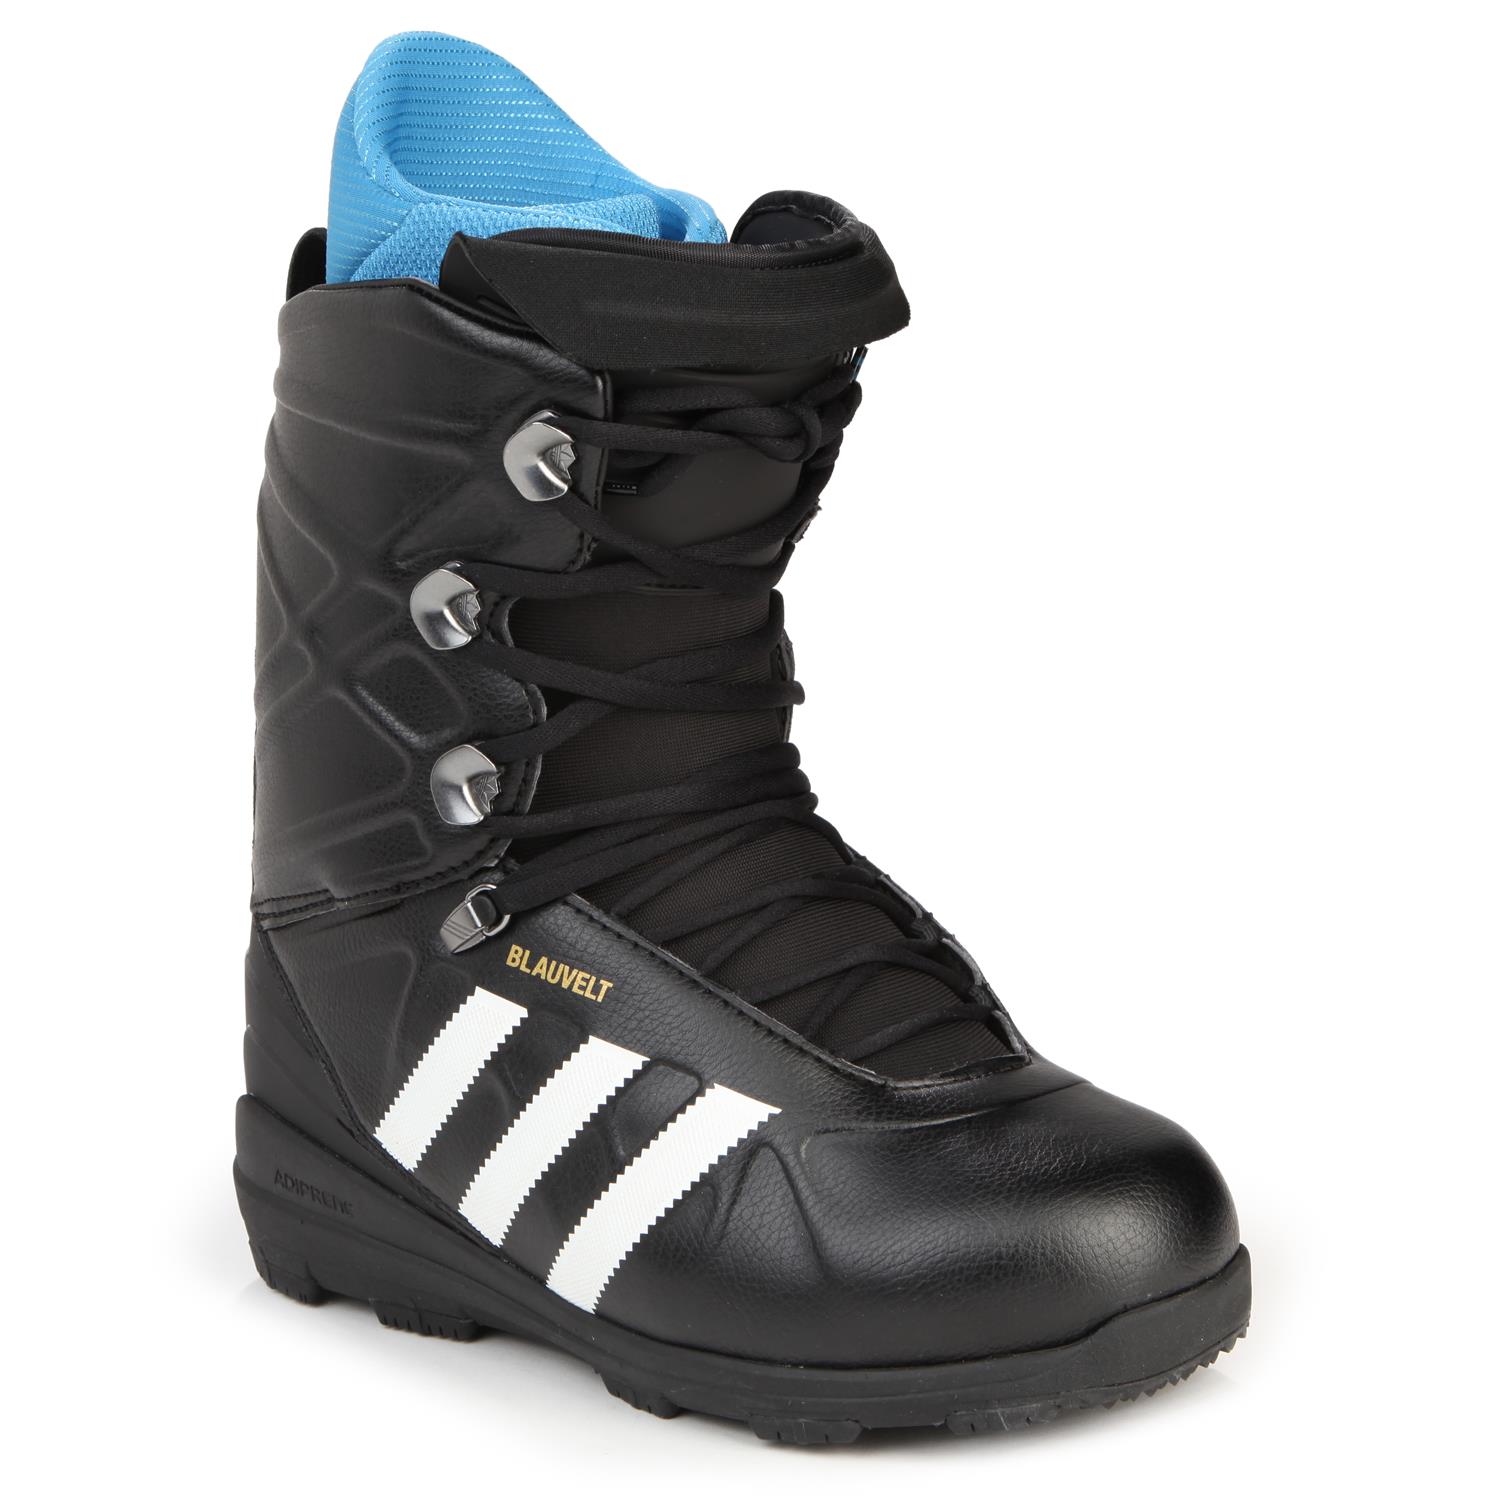 Adidas Blauvelt Snowboard Boots 2014 | evo outlet